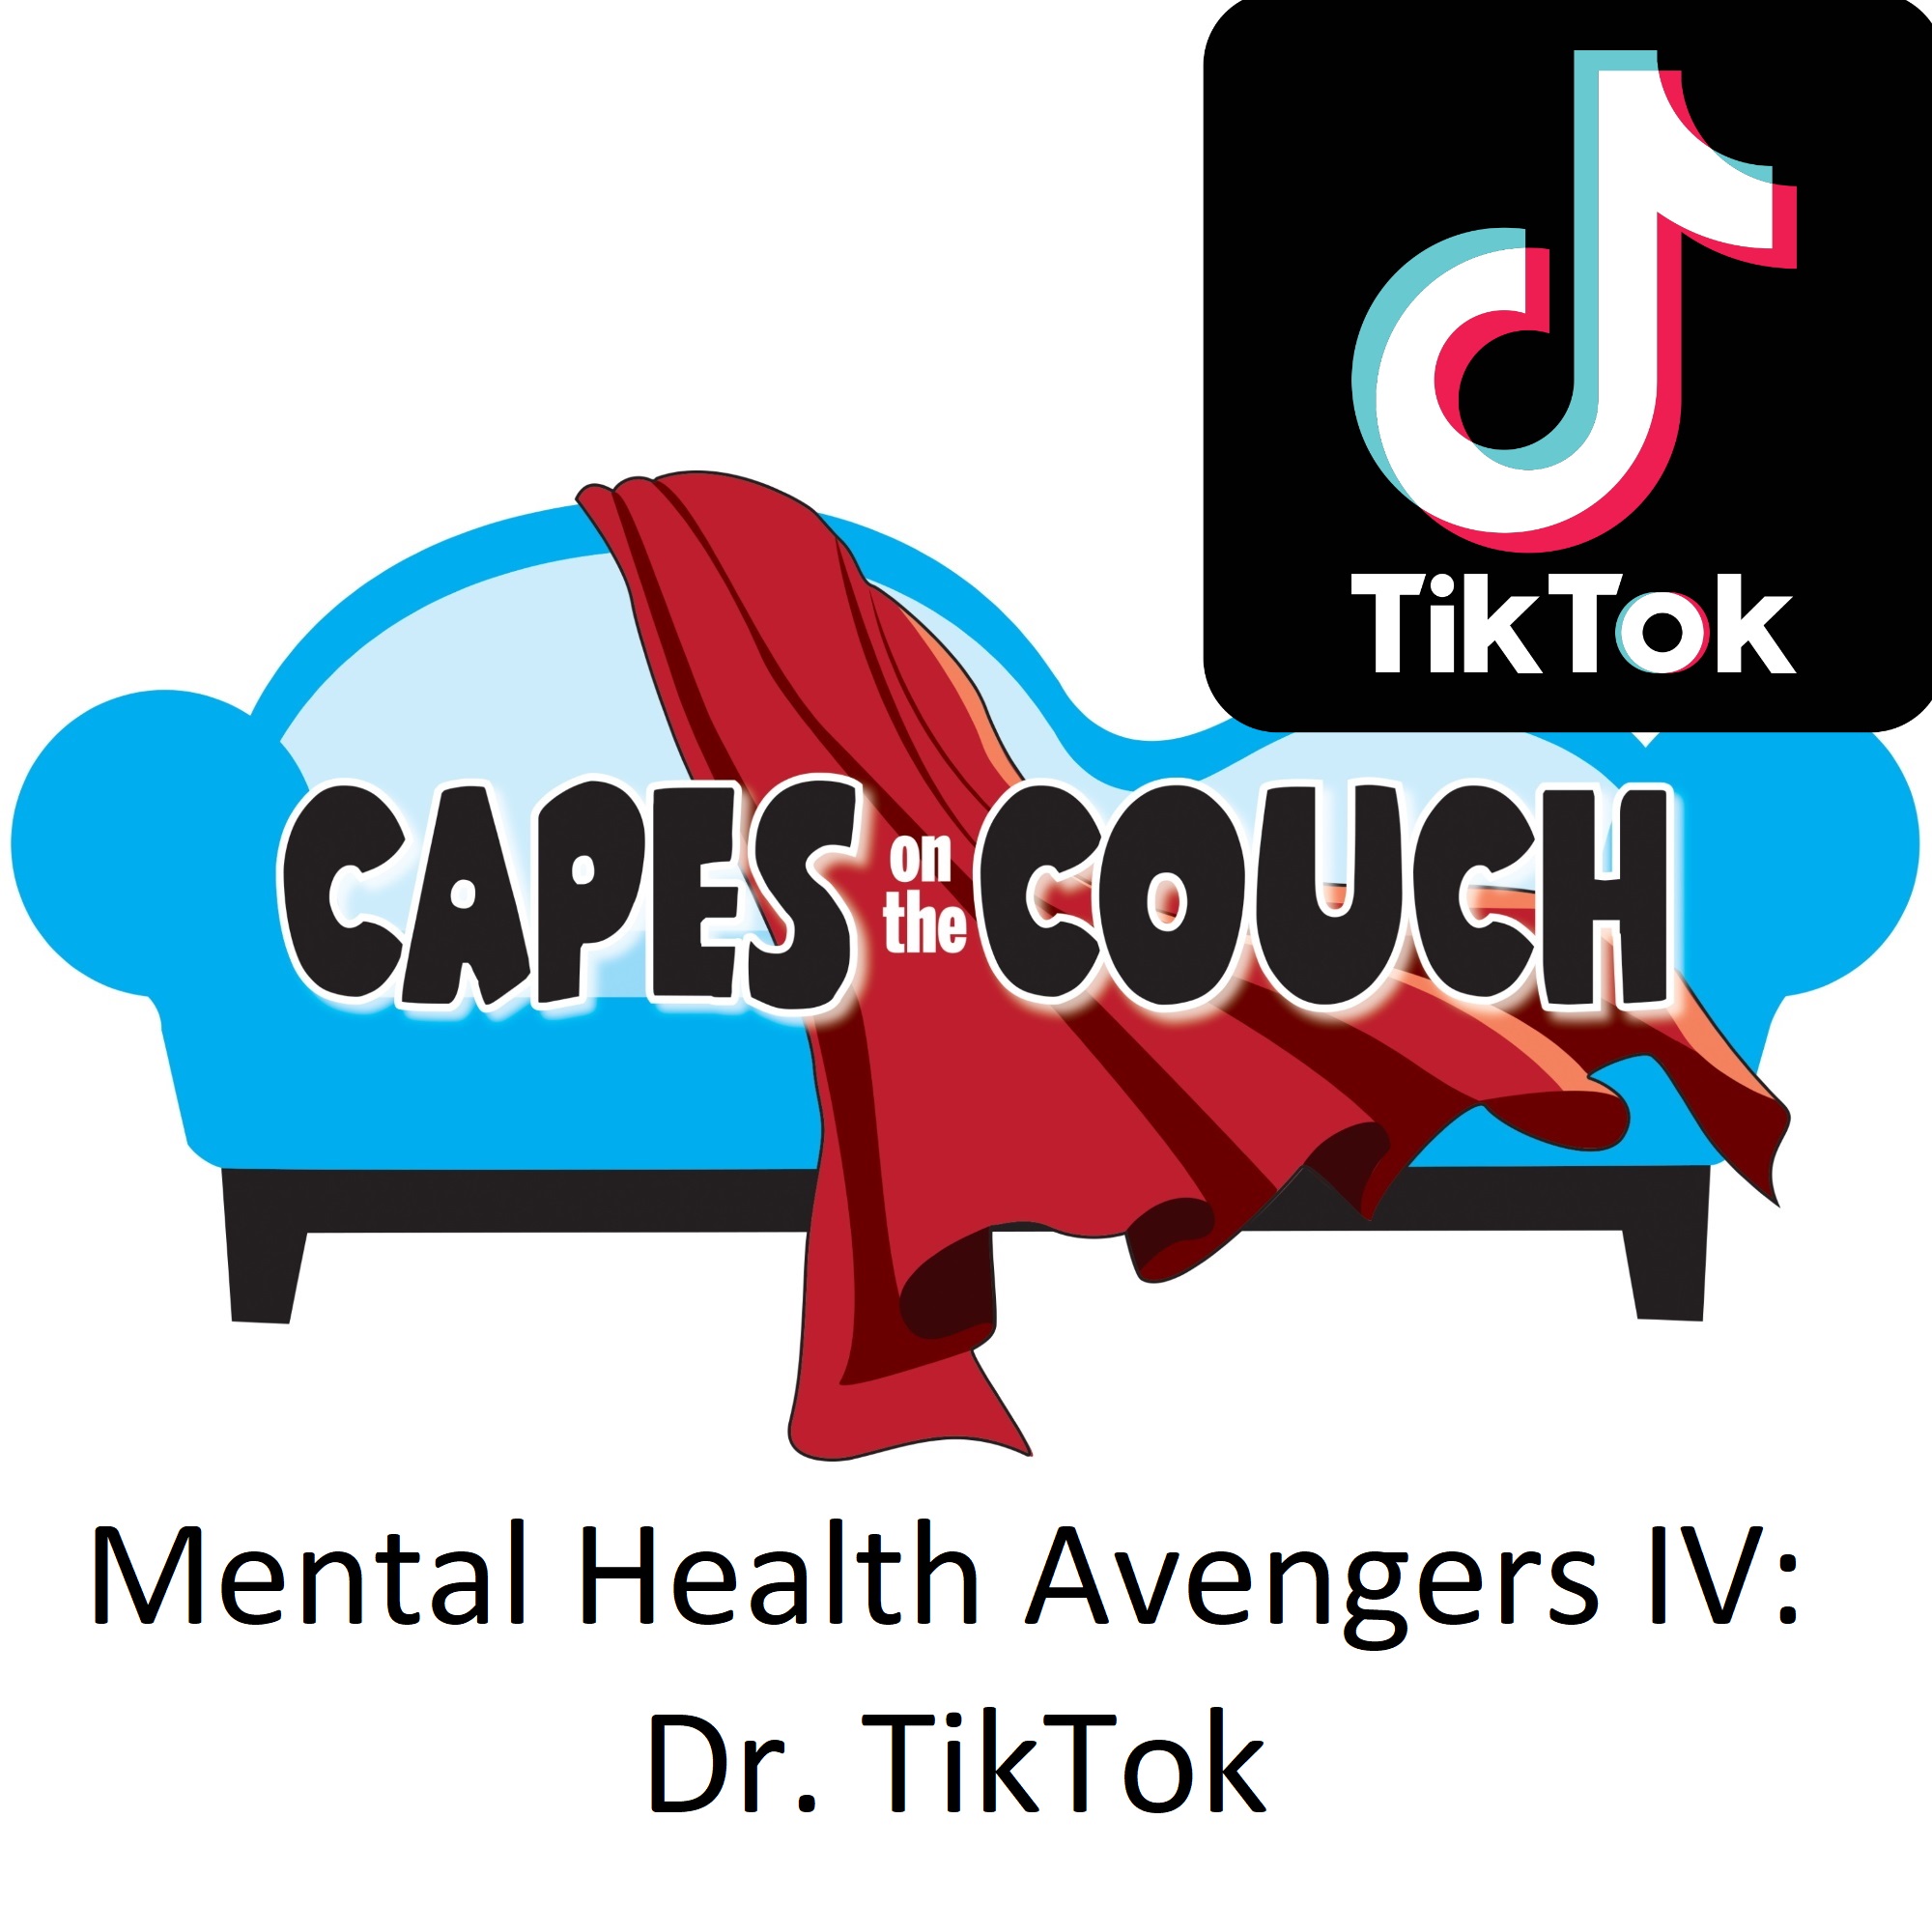 Mental Health Avengers IV: Dr. TikTok post thumbnail image